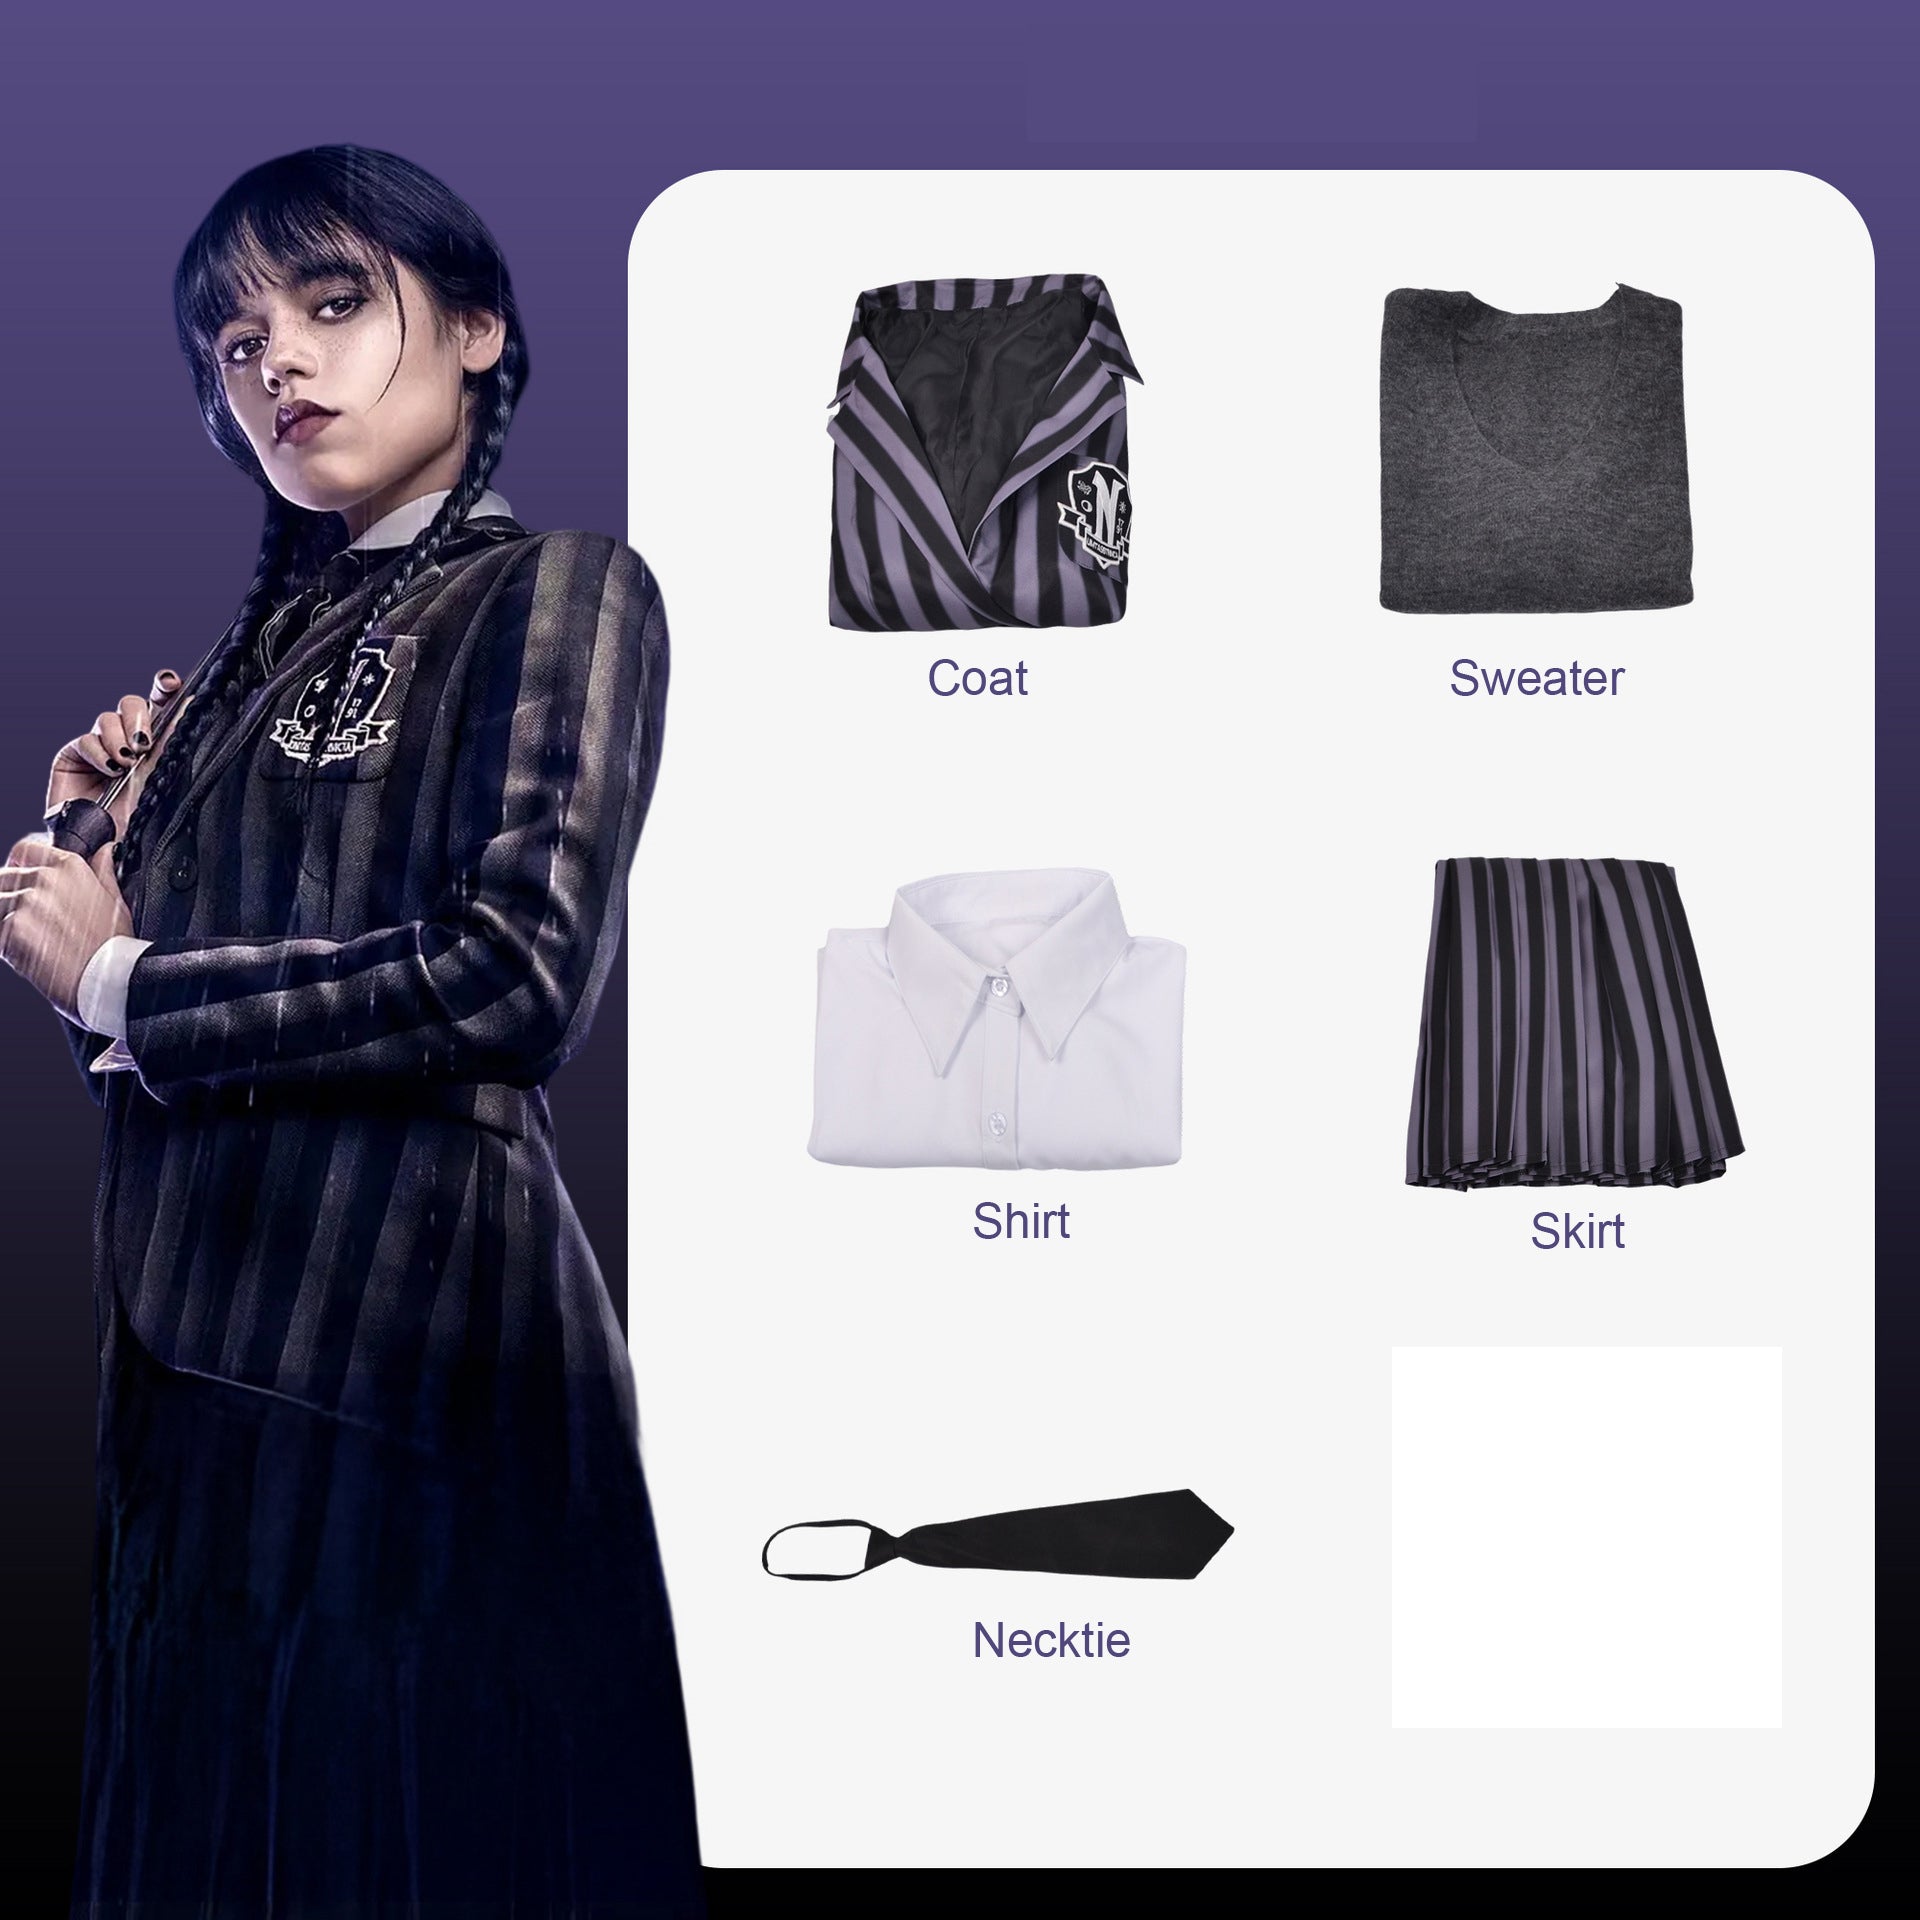 Girls Wednesday Addams Nevermore Academy Costume - Addams Family